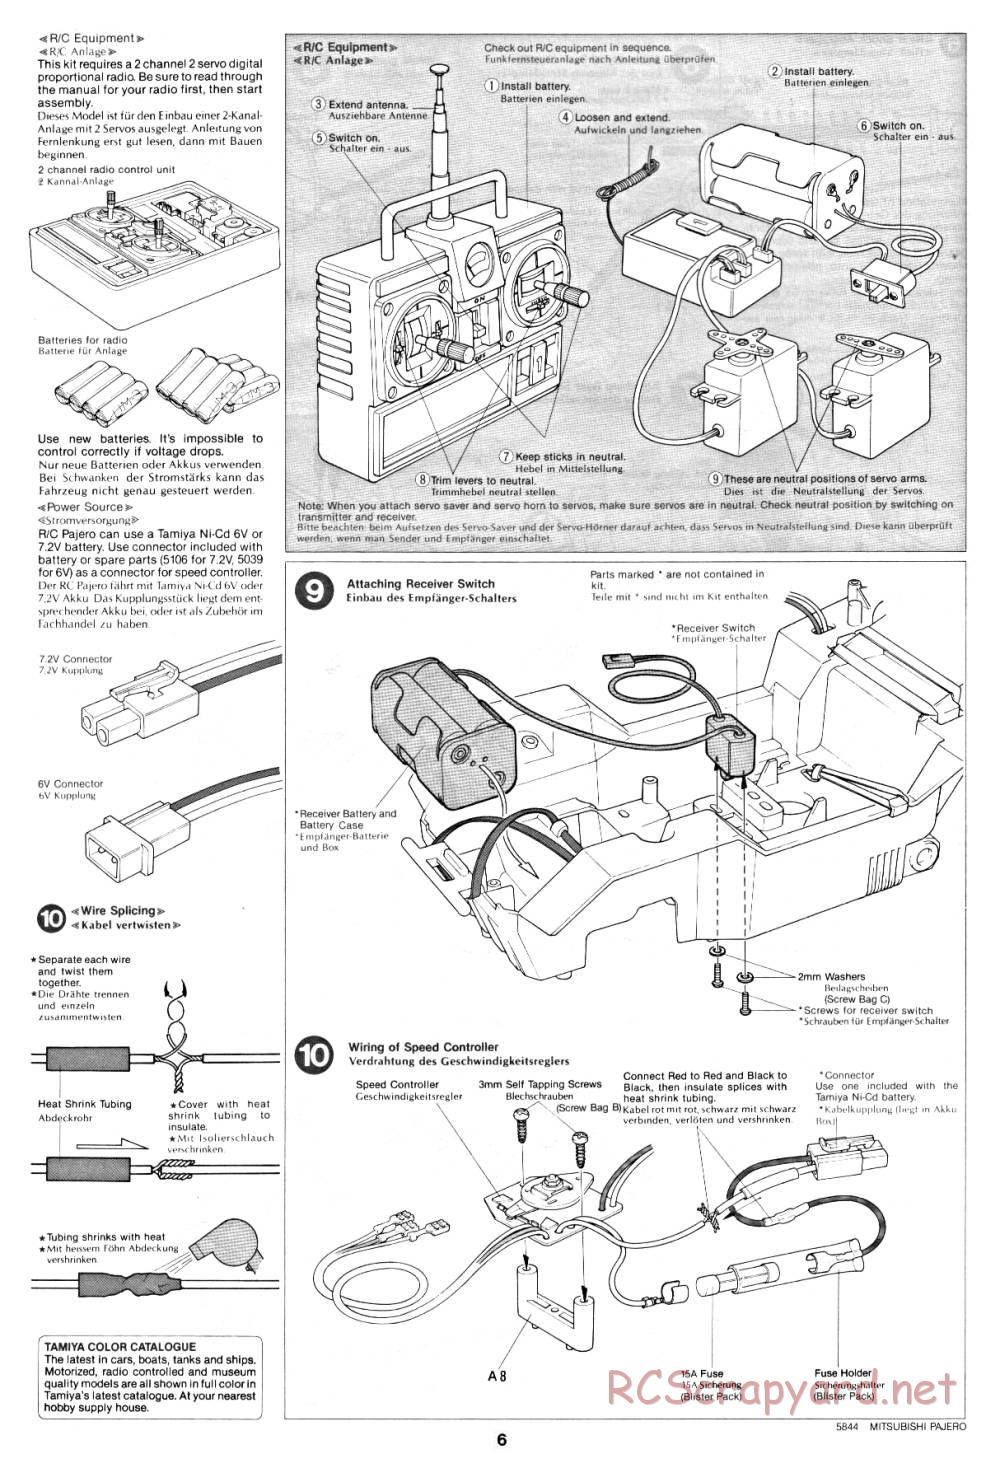 Tamiya - Mitsubishi Pajero - 58044 - Manual - Page 6